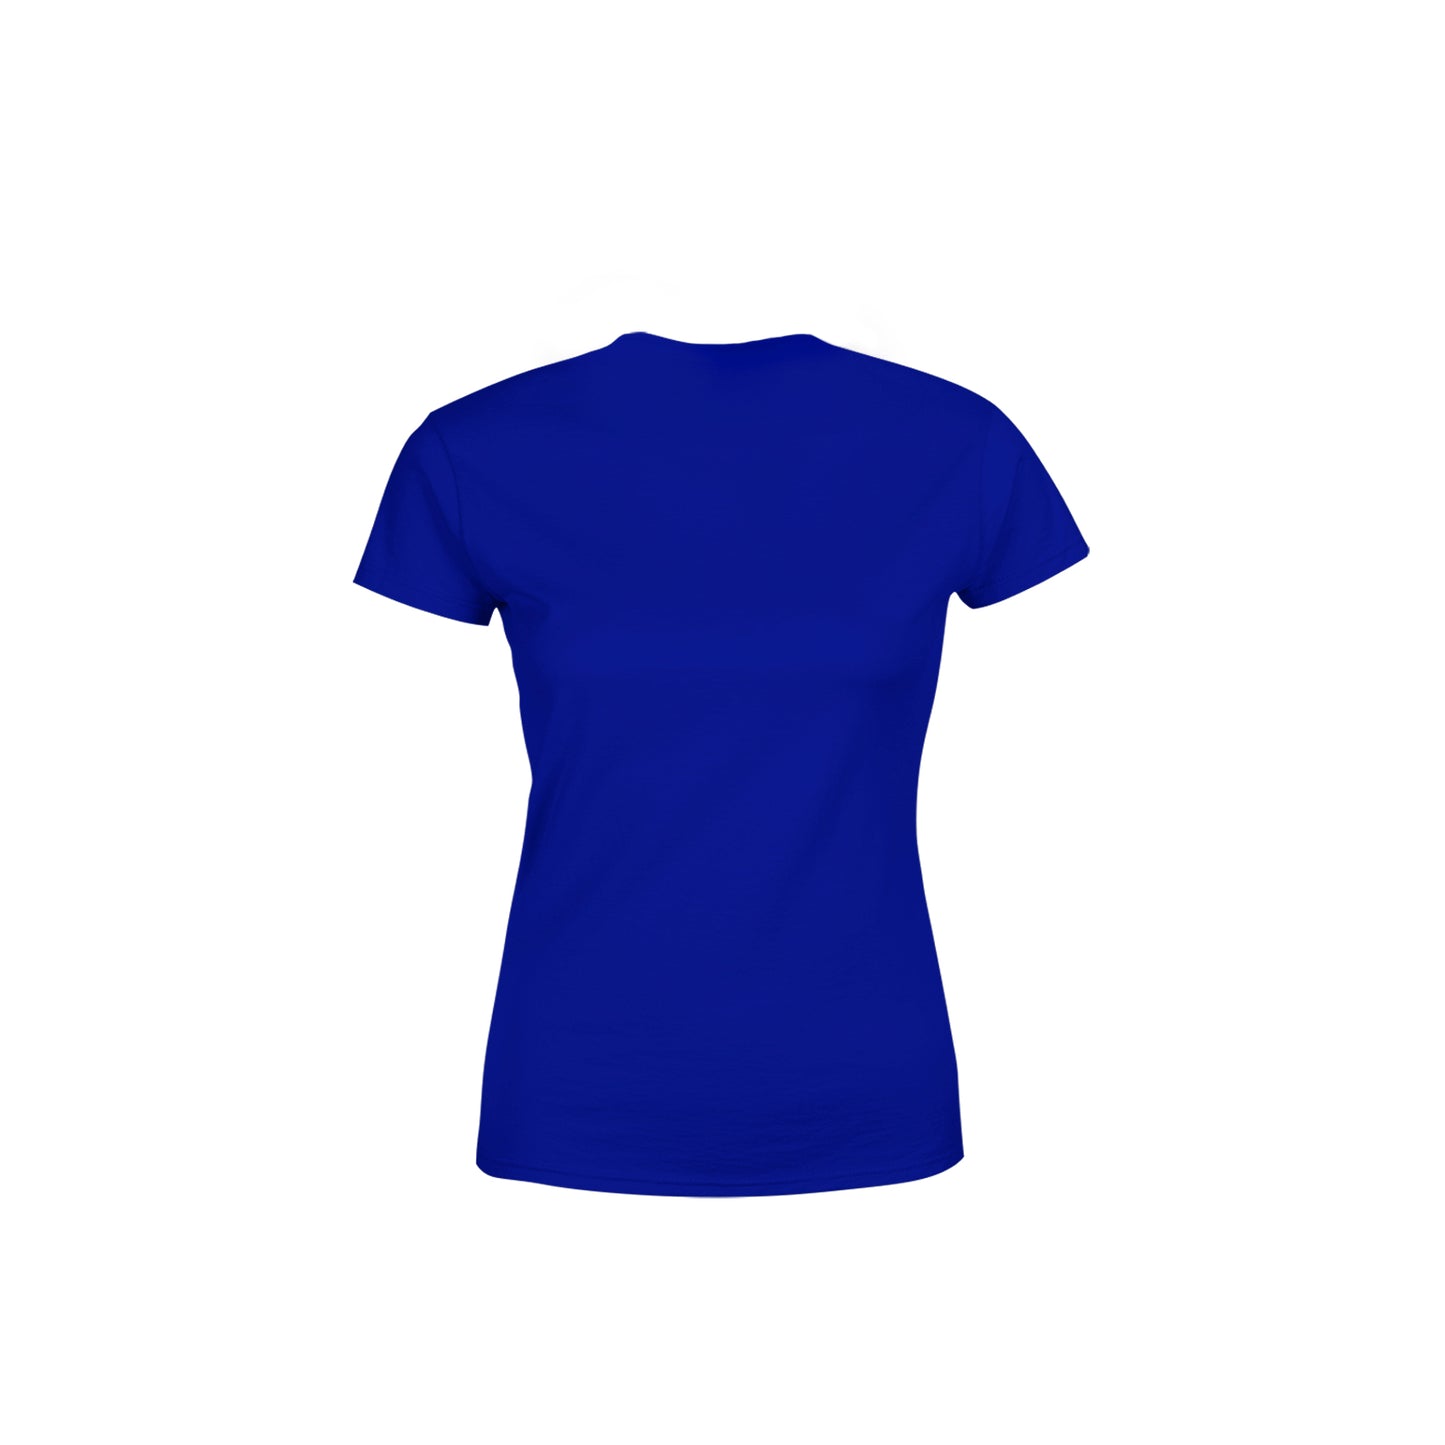 00 Number Women's T-Shirt (Royal Blue)